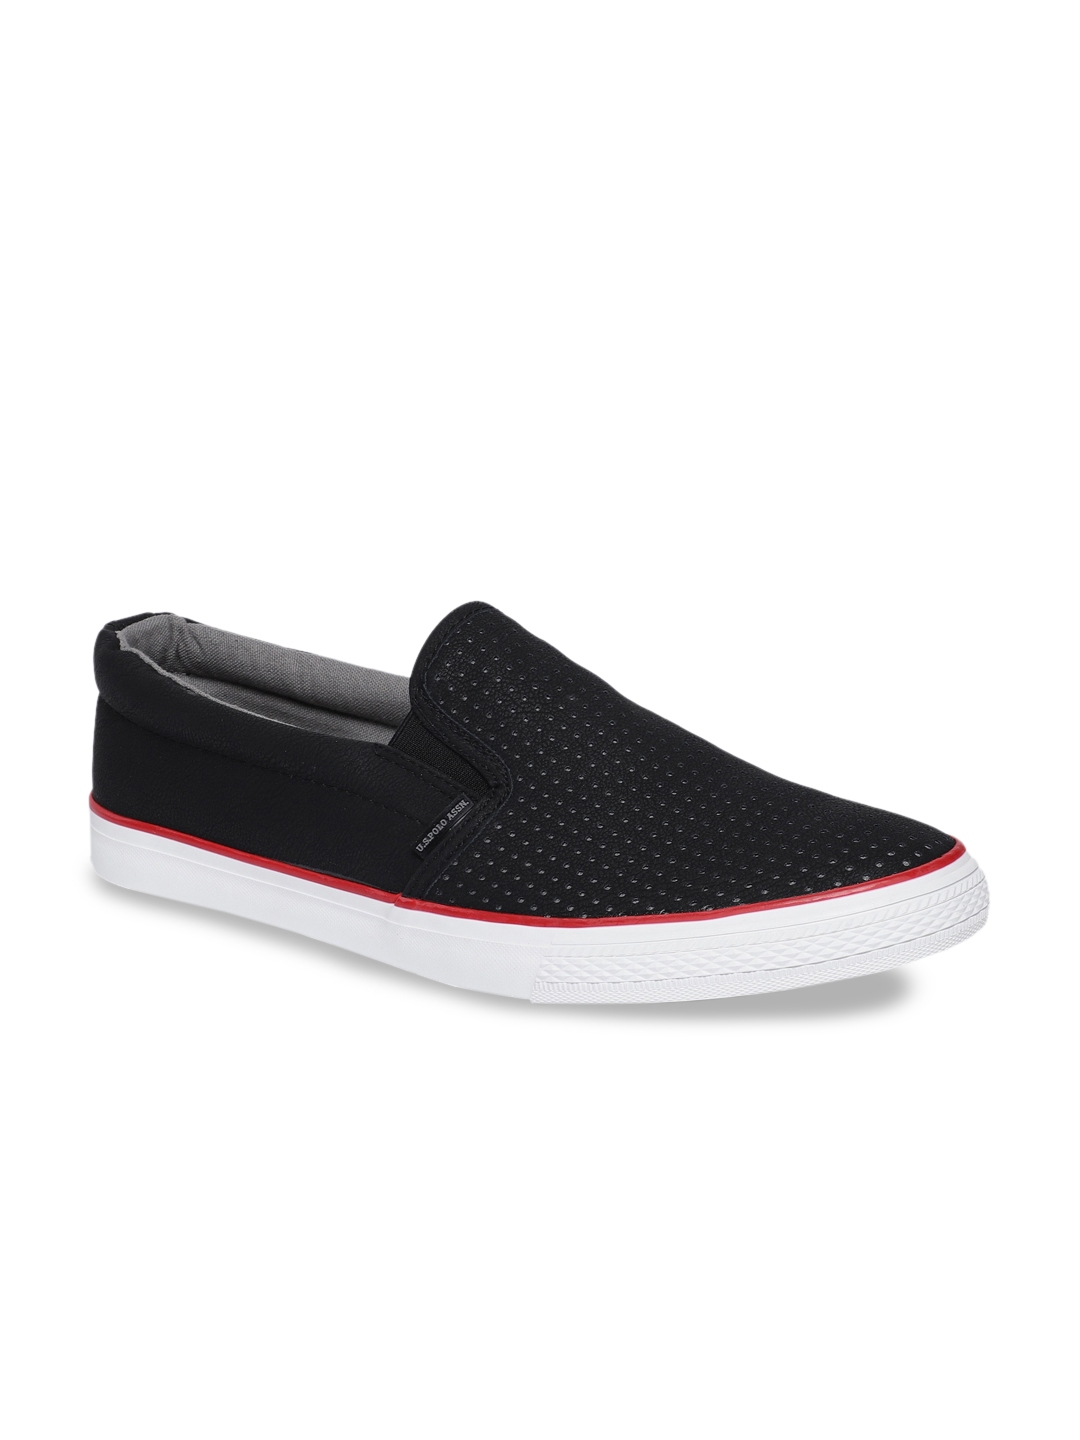 Buy U.S. Polo Assn. Men Black Slip On Sneakers - Casual Shoes for Men ...